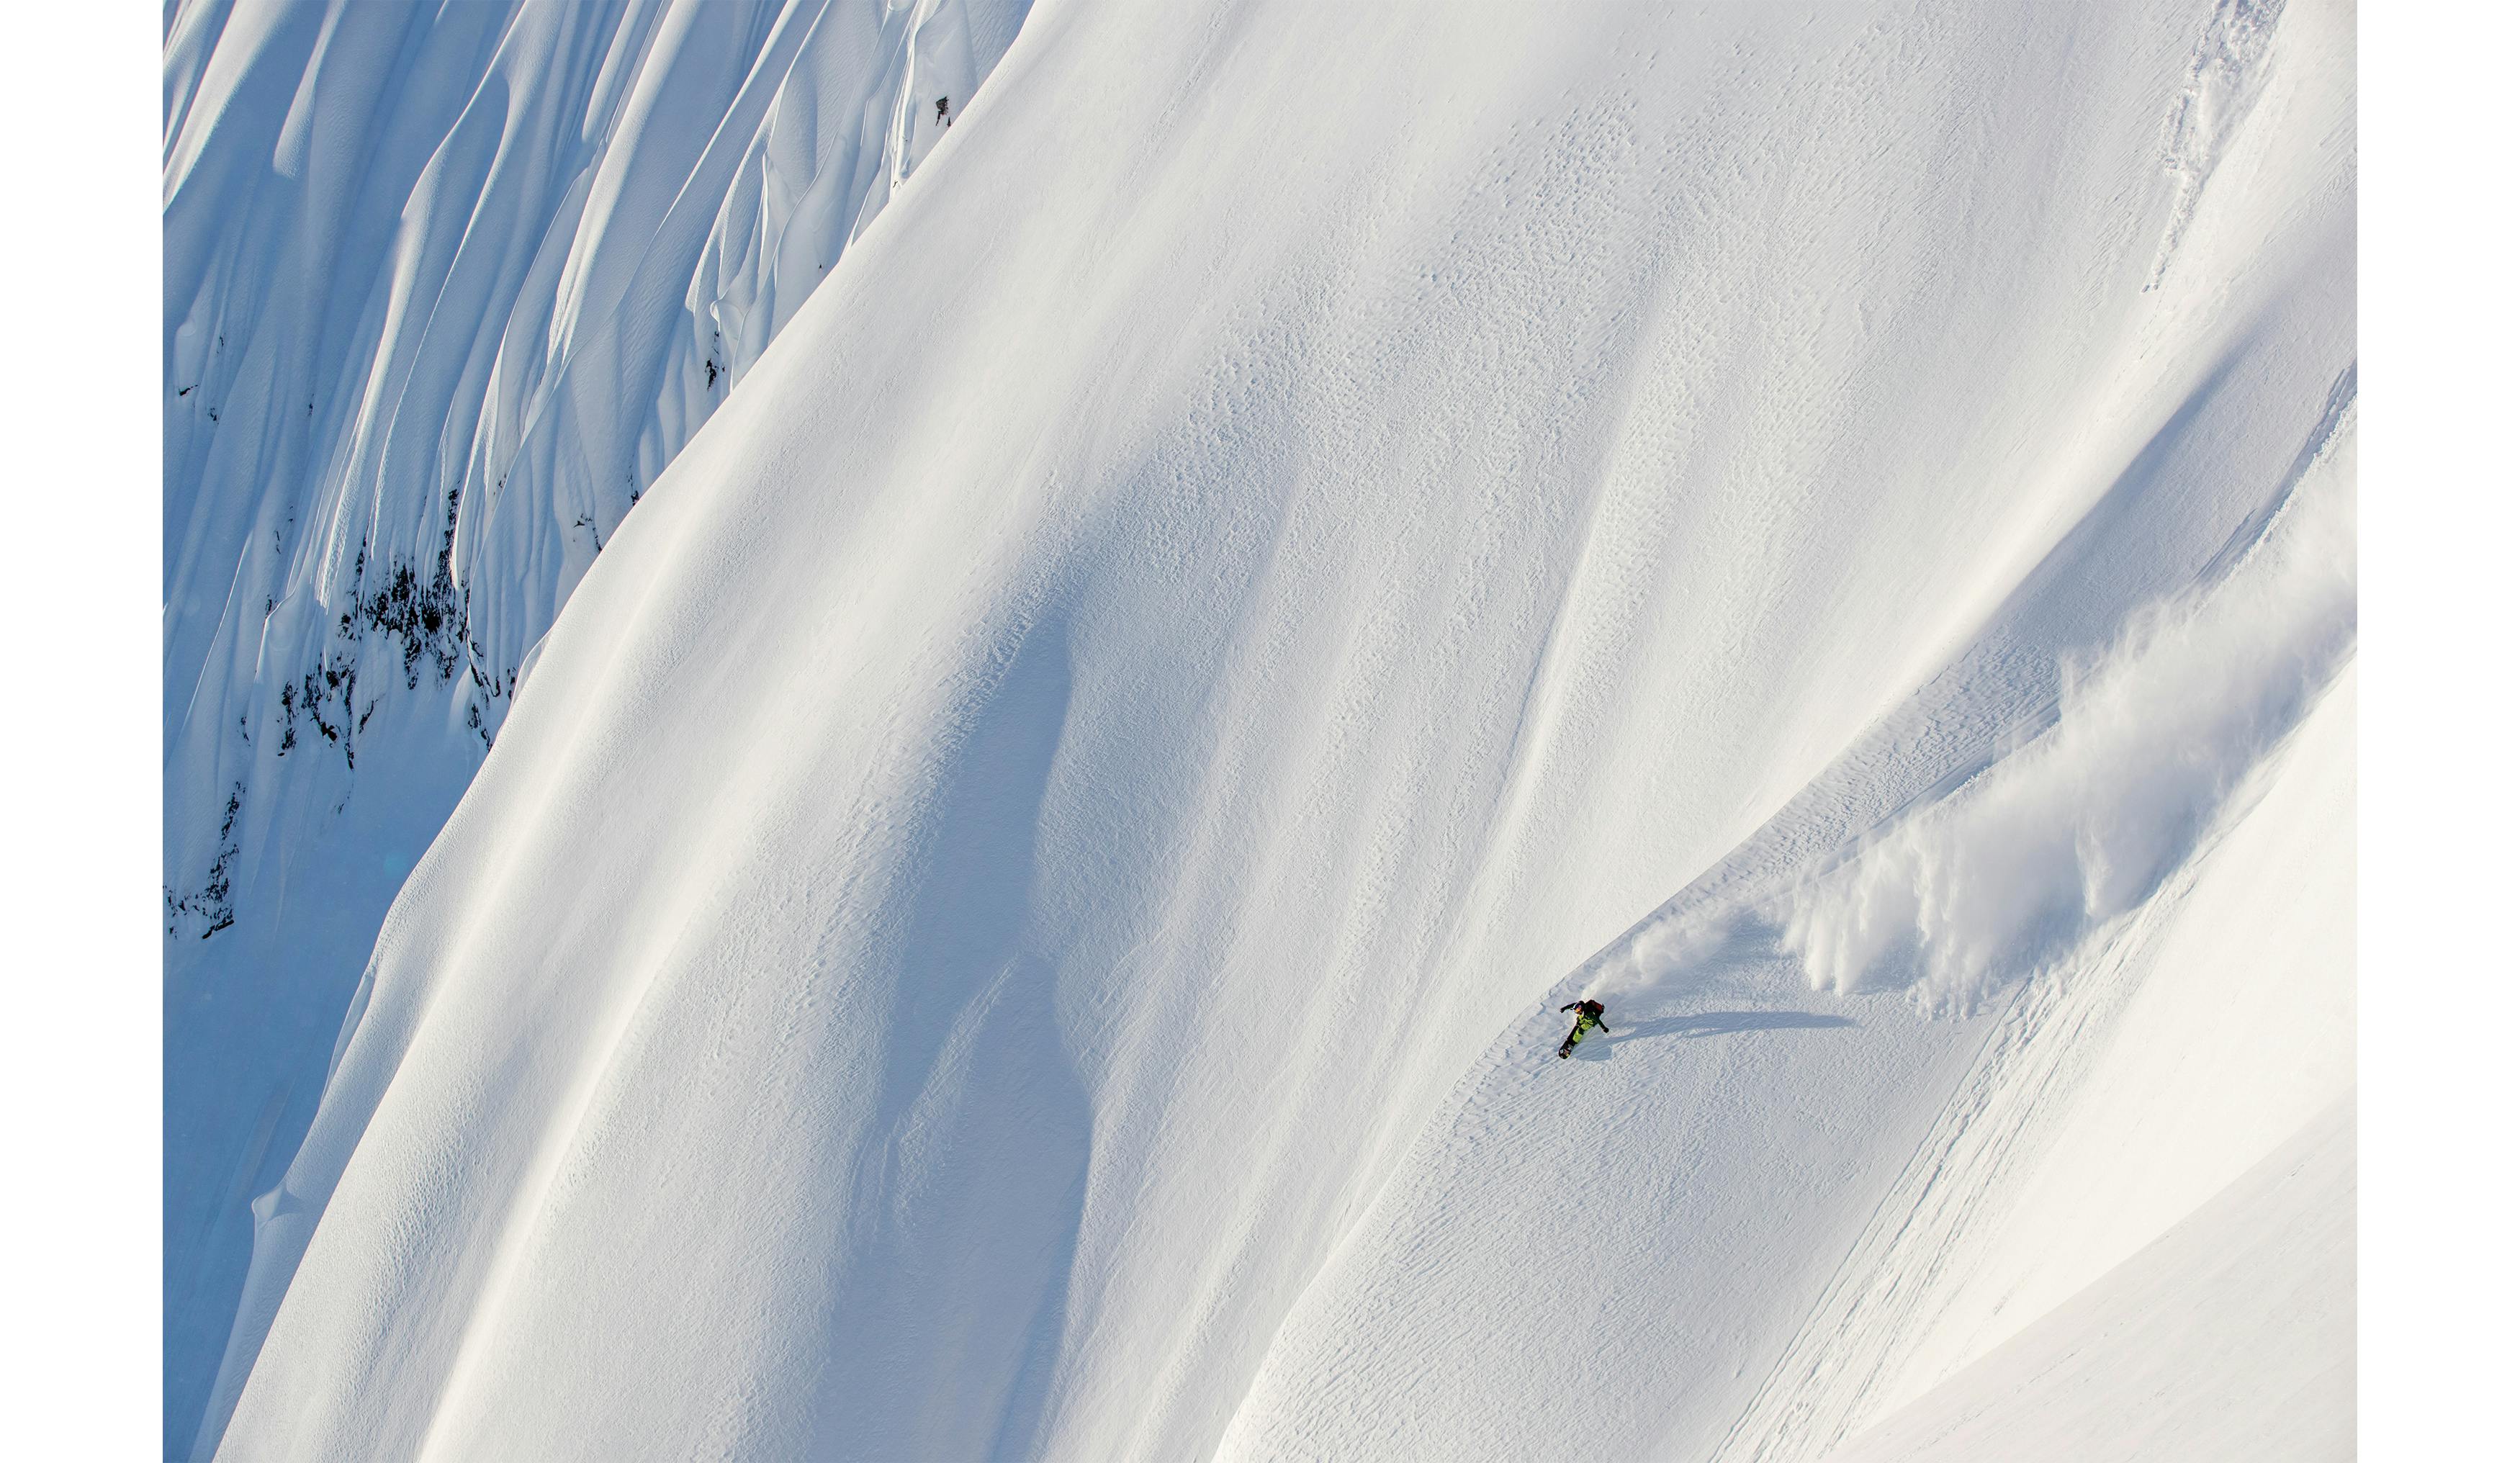 Black Diamond athlete John Jackson Snowboarding down a big mountain line in Alaska. 